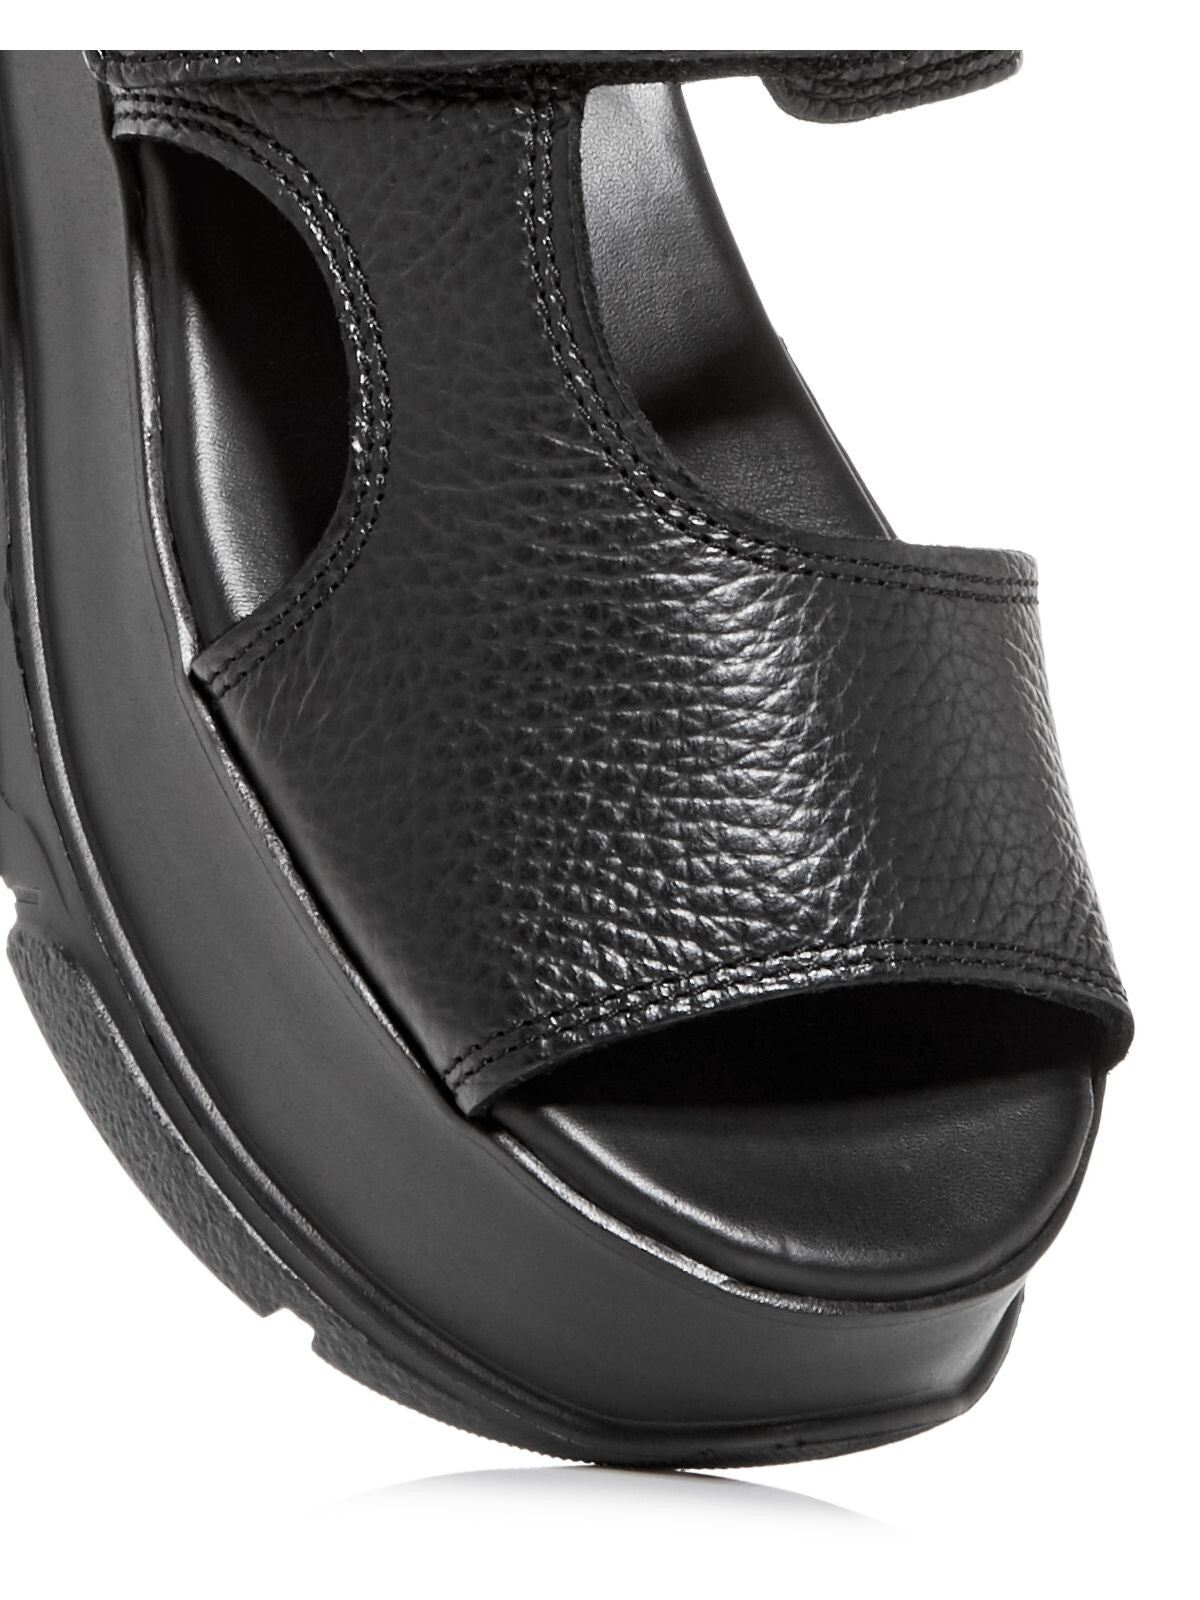 JOSHUAS Womens Black 2-1/2" Platform Asymmetrical Ankle Strap Spice Open Toe Wedge Leather Sandals Shoes